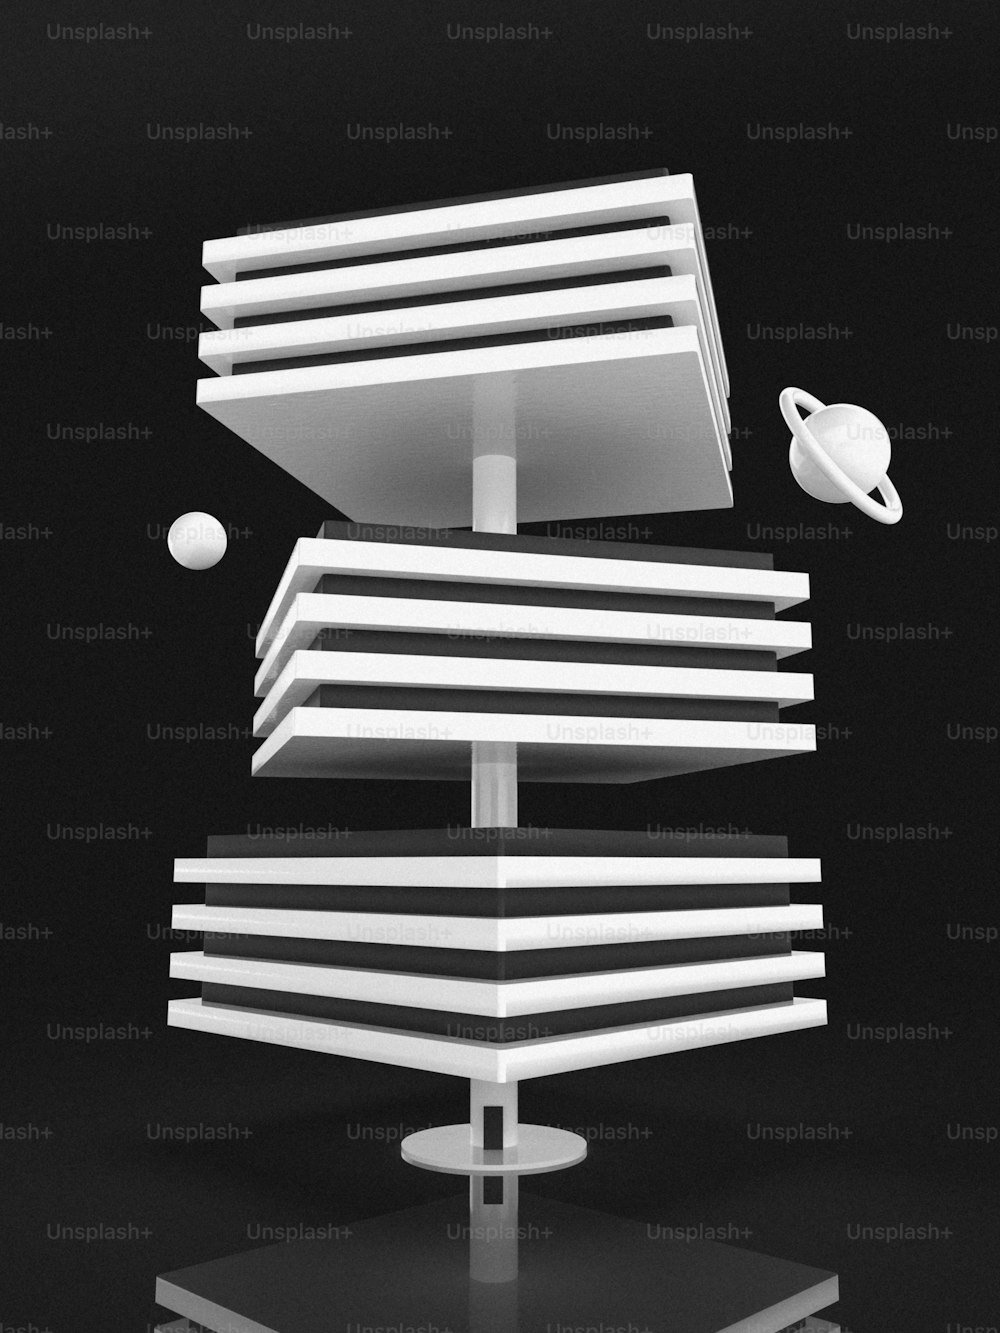 a black and white photo of a book shelf